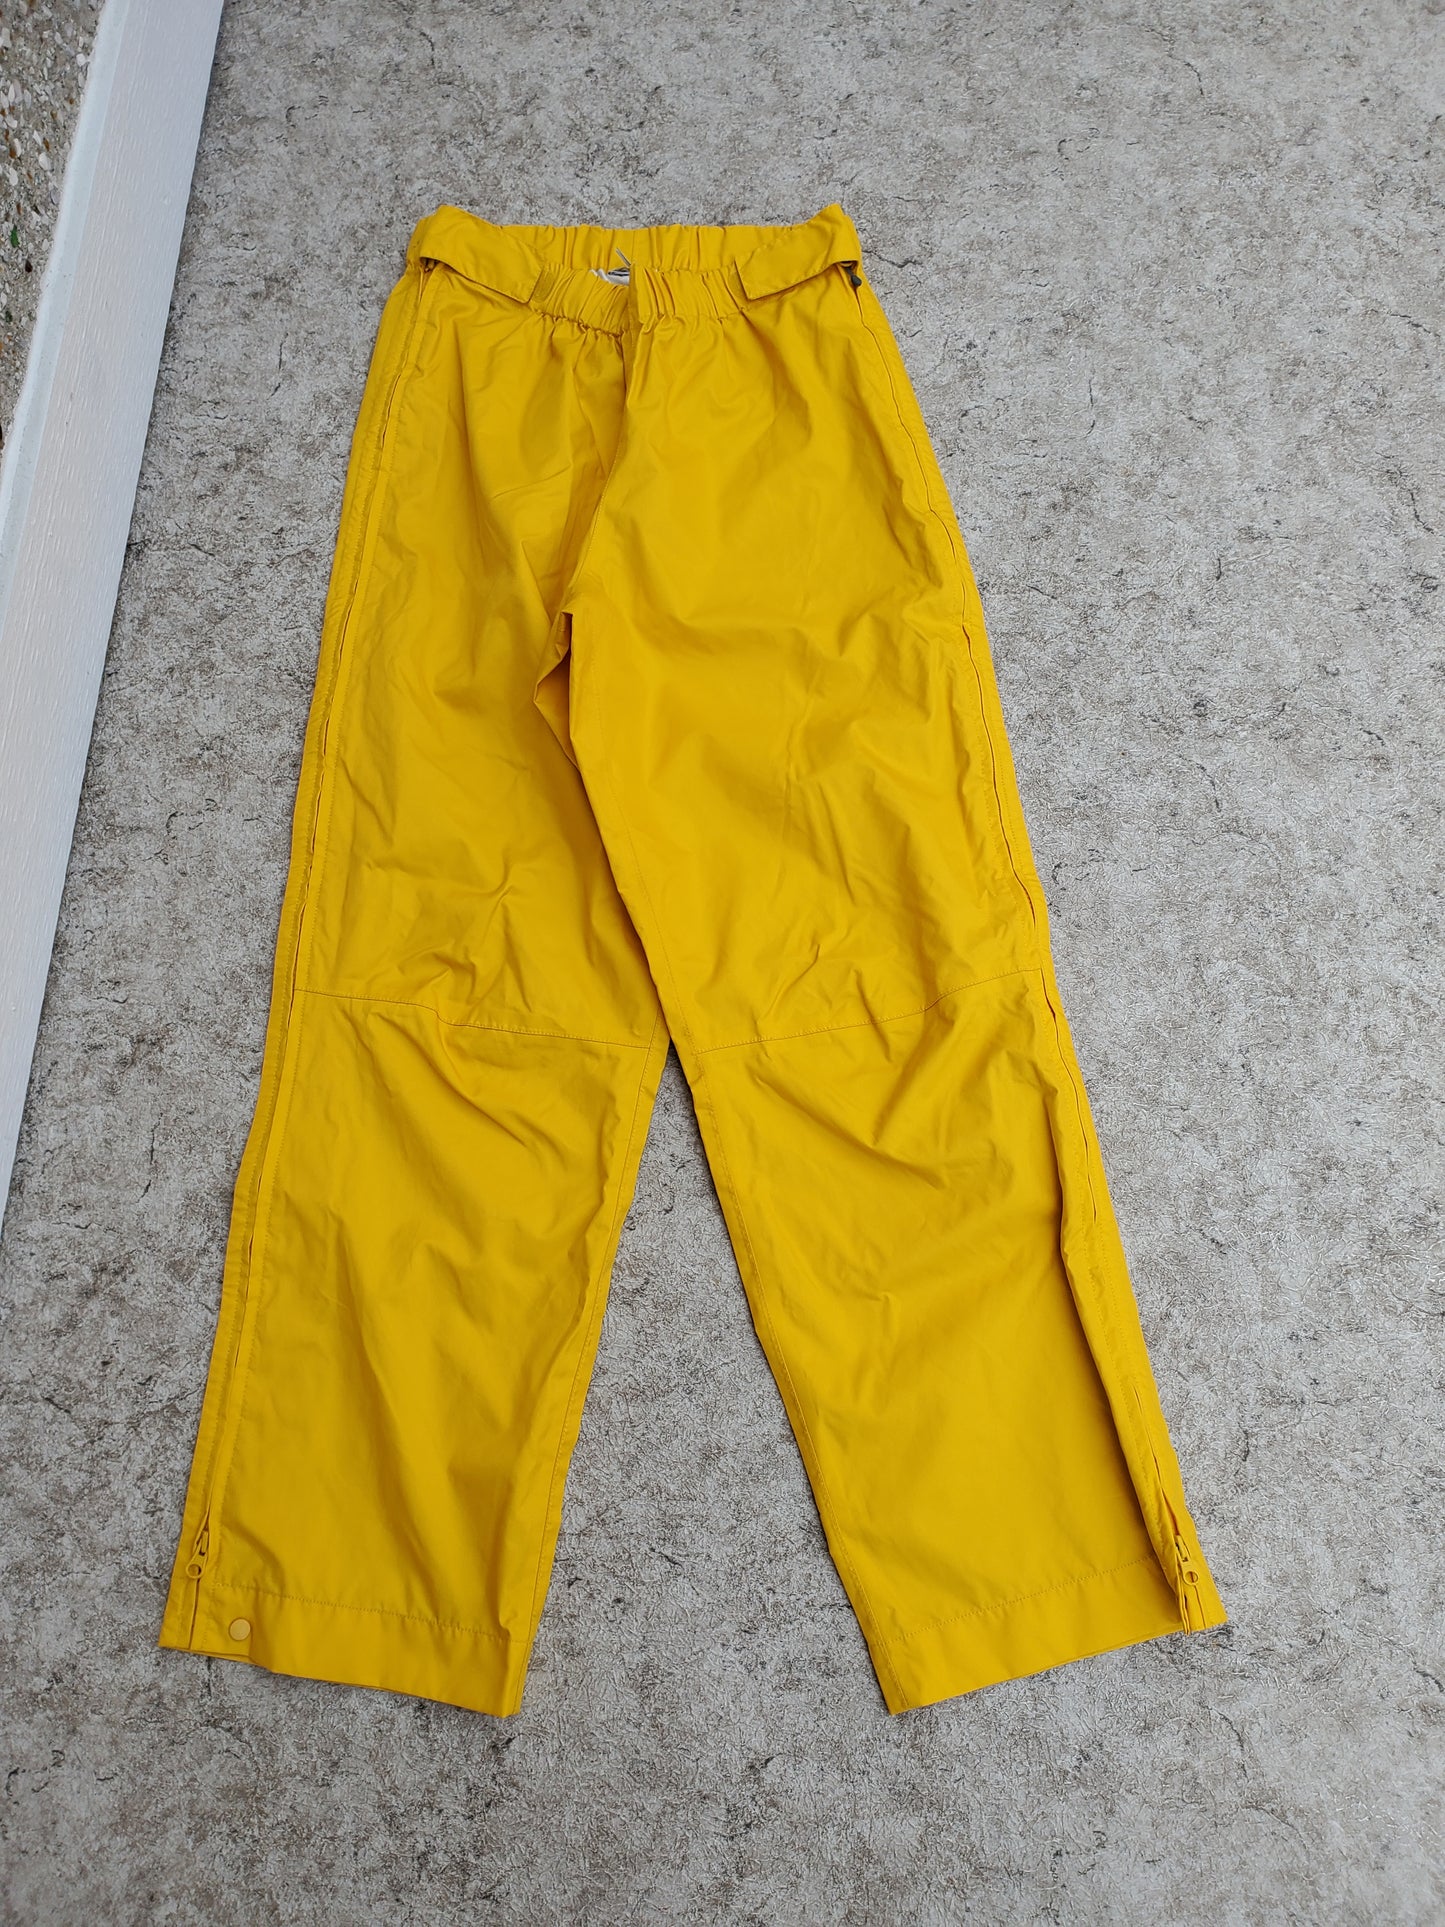 Rain Pants Men's Size Medium Waterproof Full Zippers Up Both legs Great For Biking, Working, Motorcycle Yellow